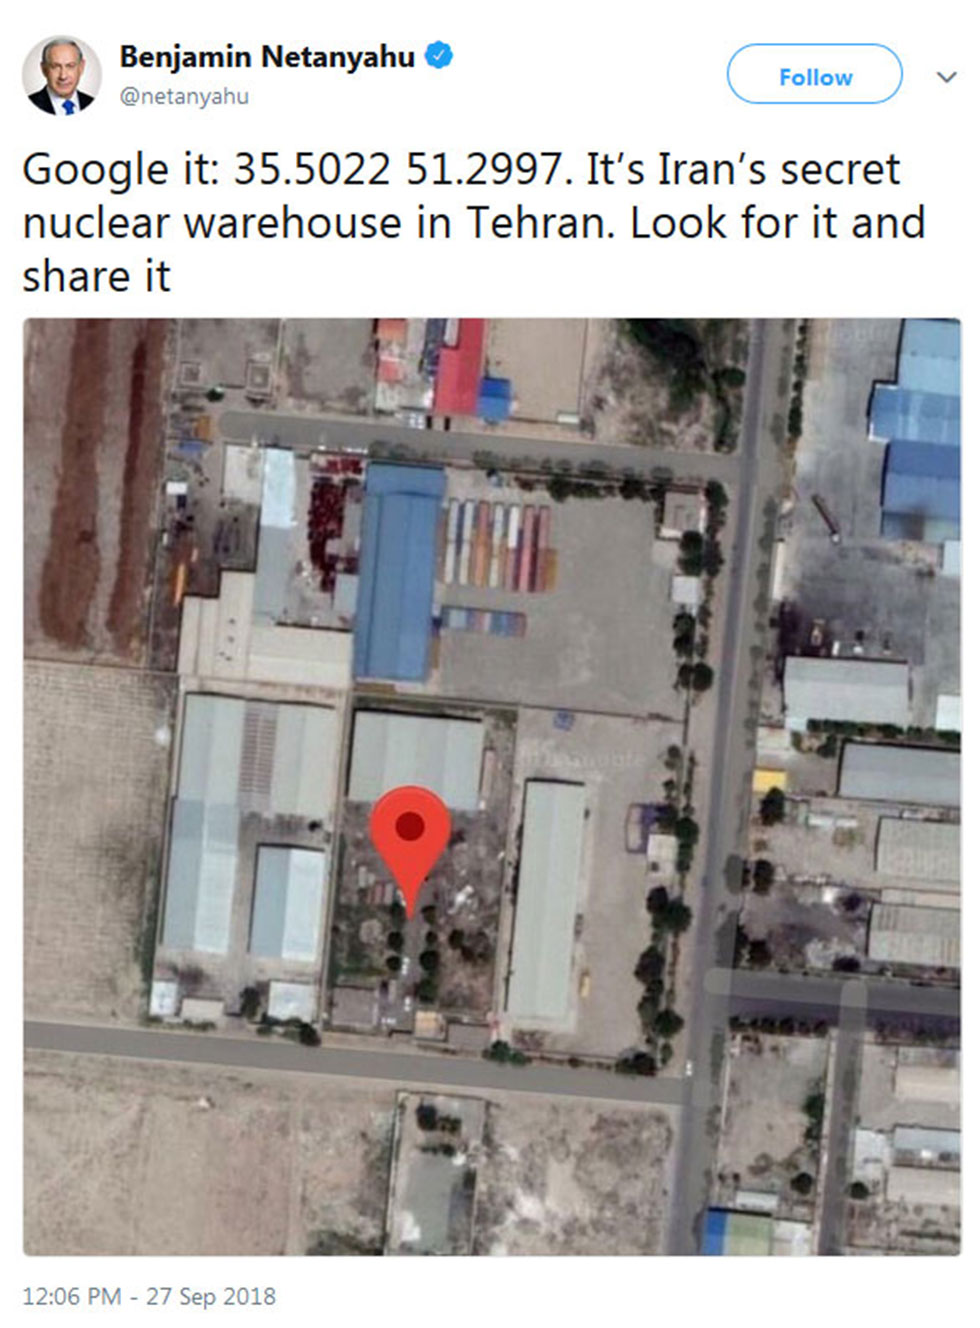 Benjamin Netanyahu unveiling an Iranian secret nuclear site last year